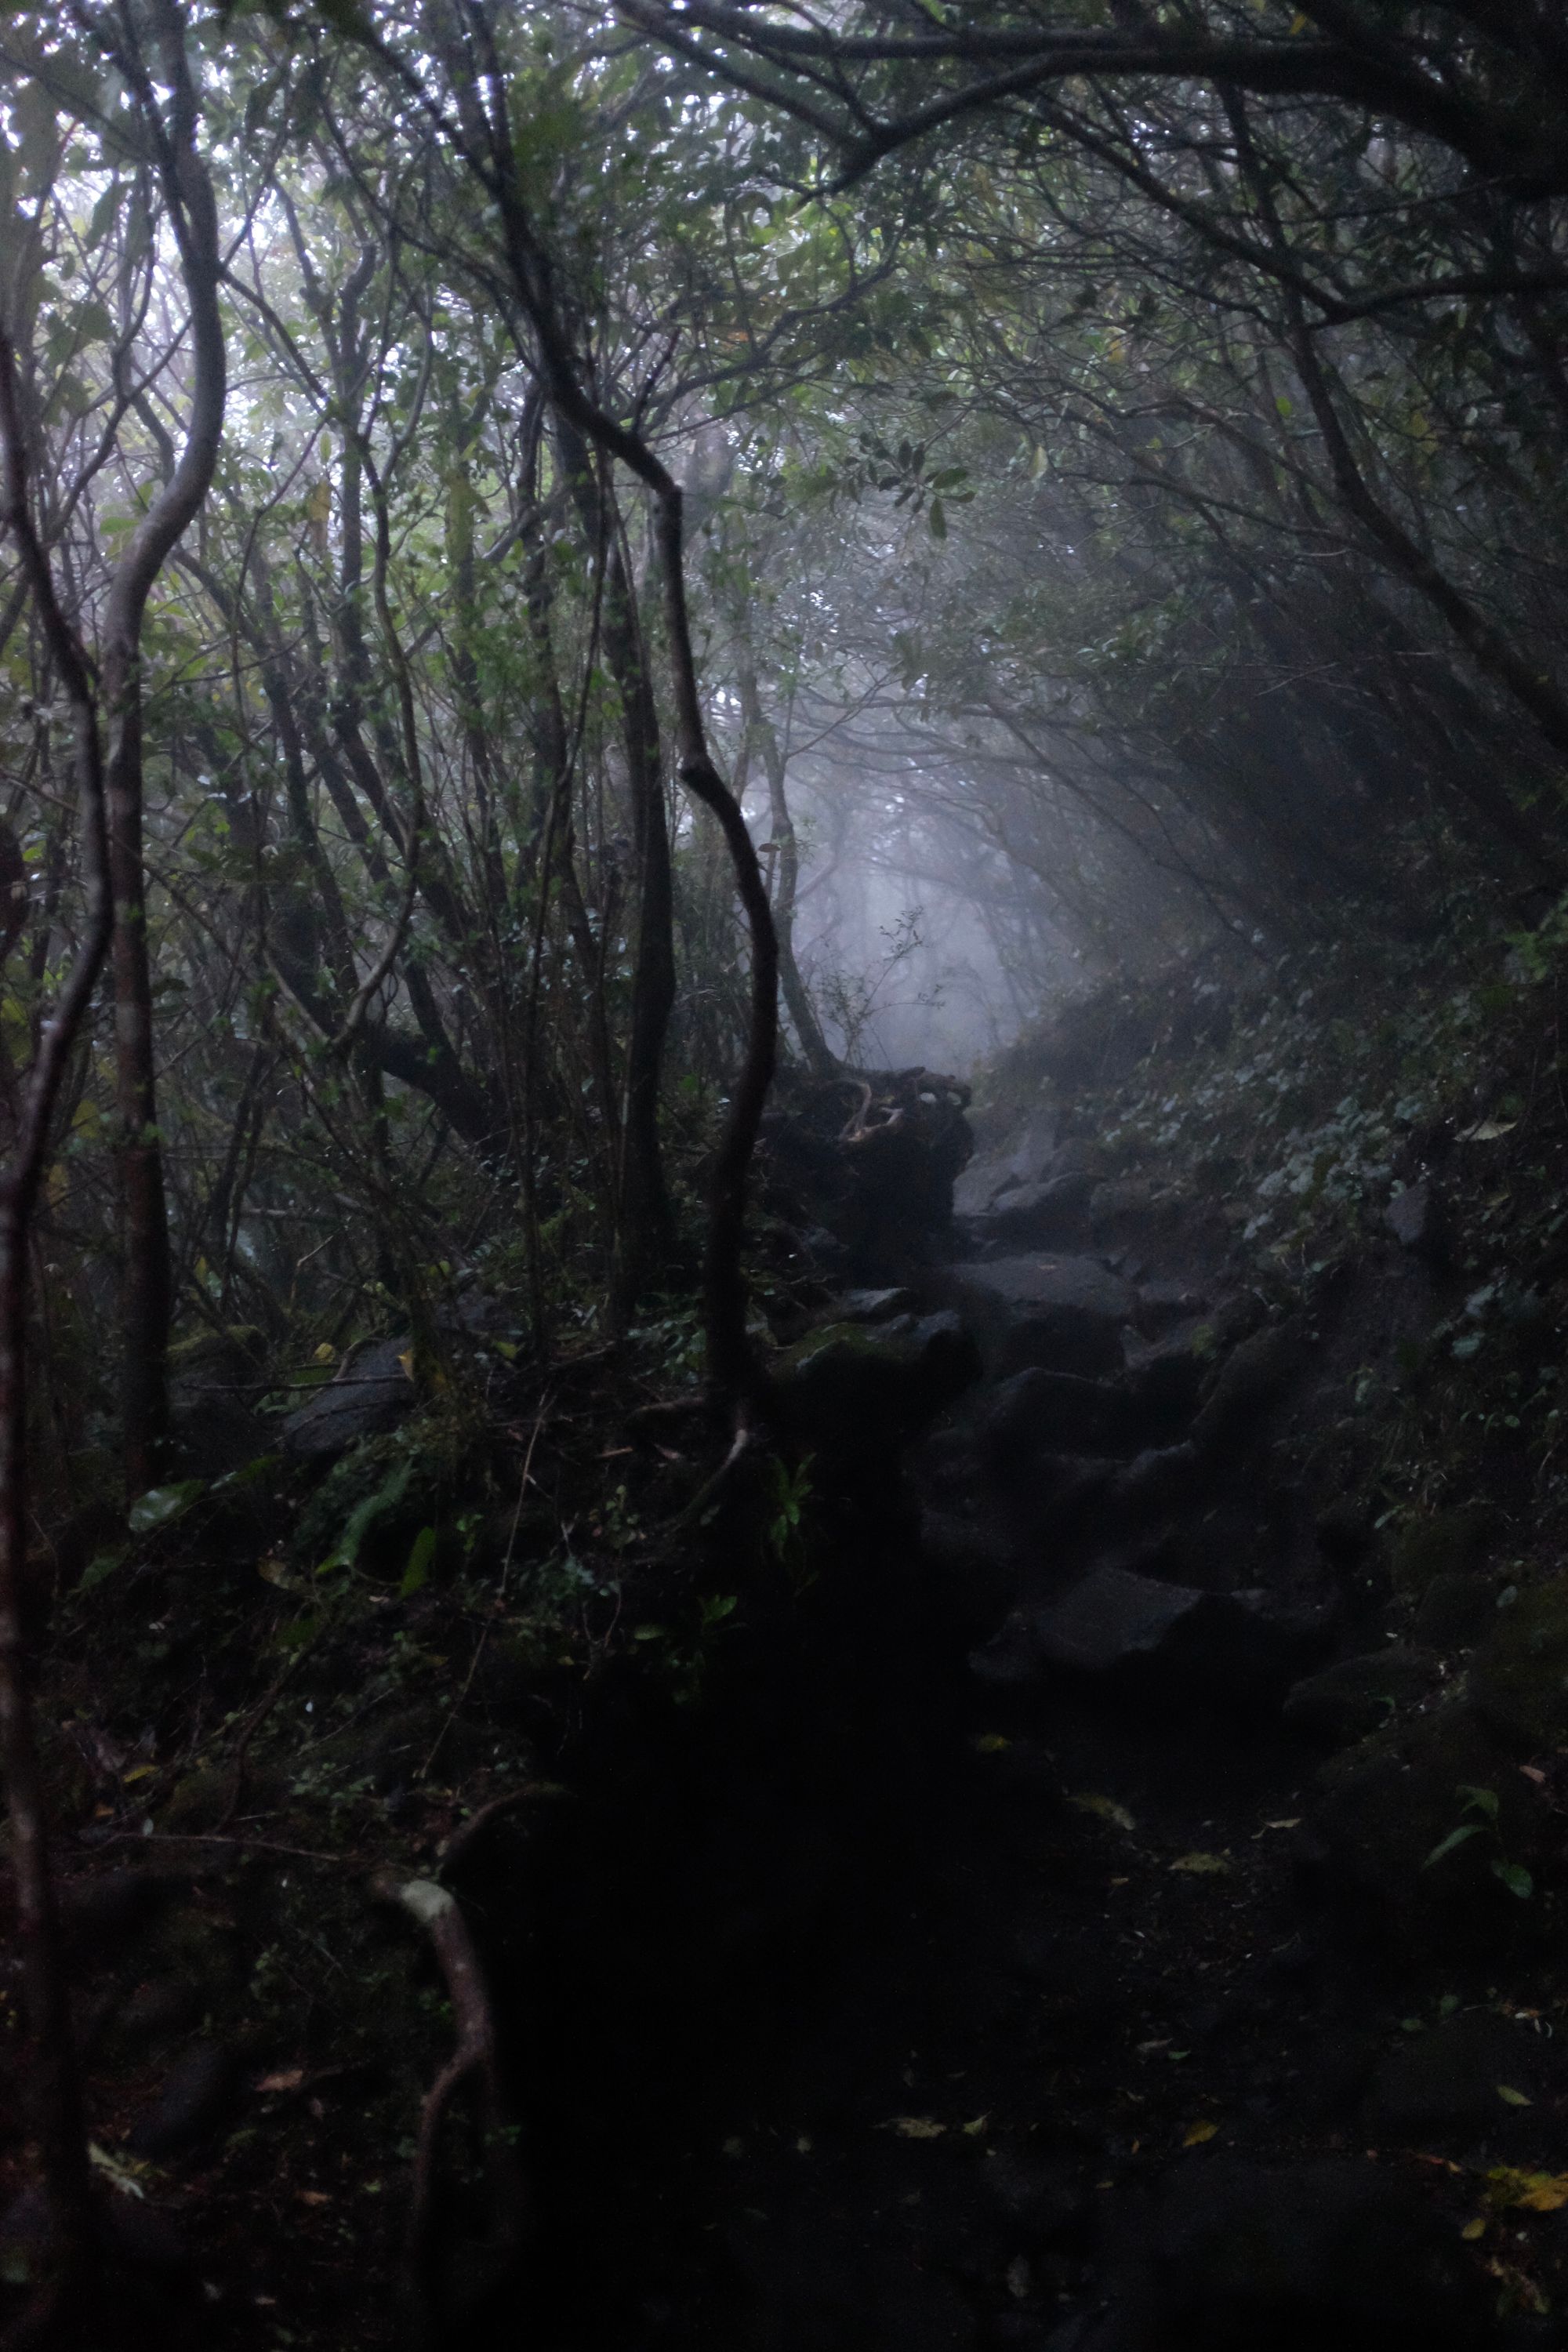 A rocky path in a gloomy, foggy forest.